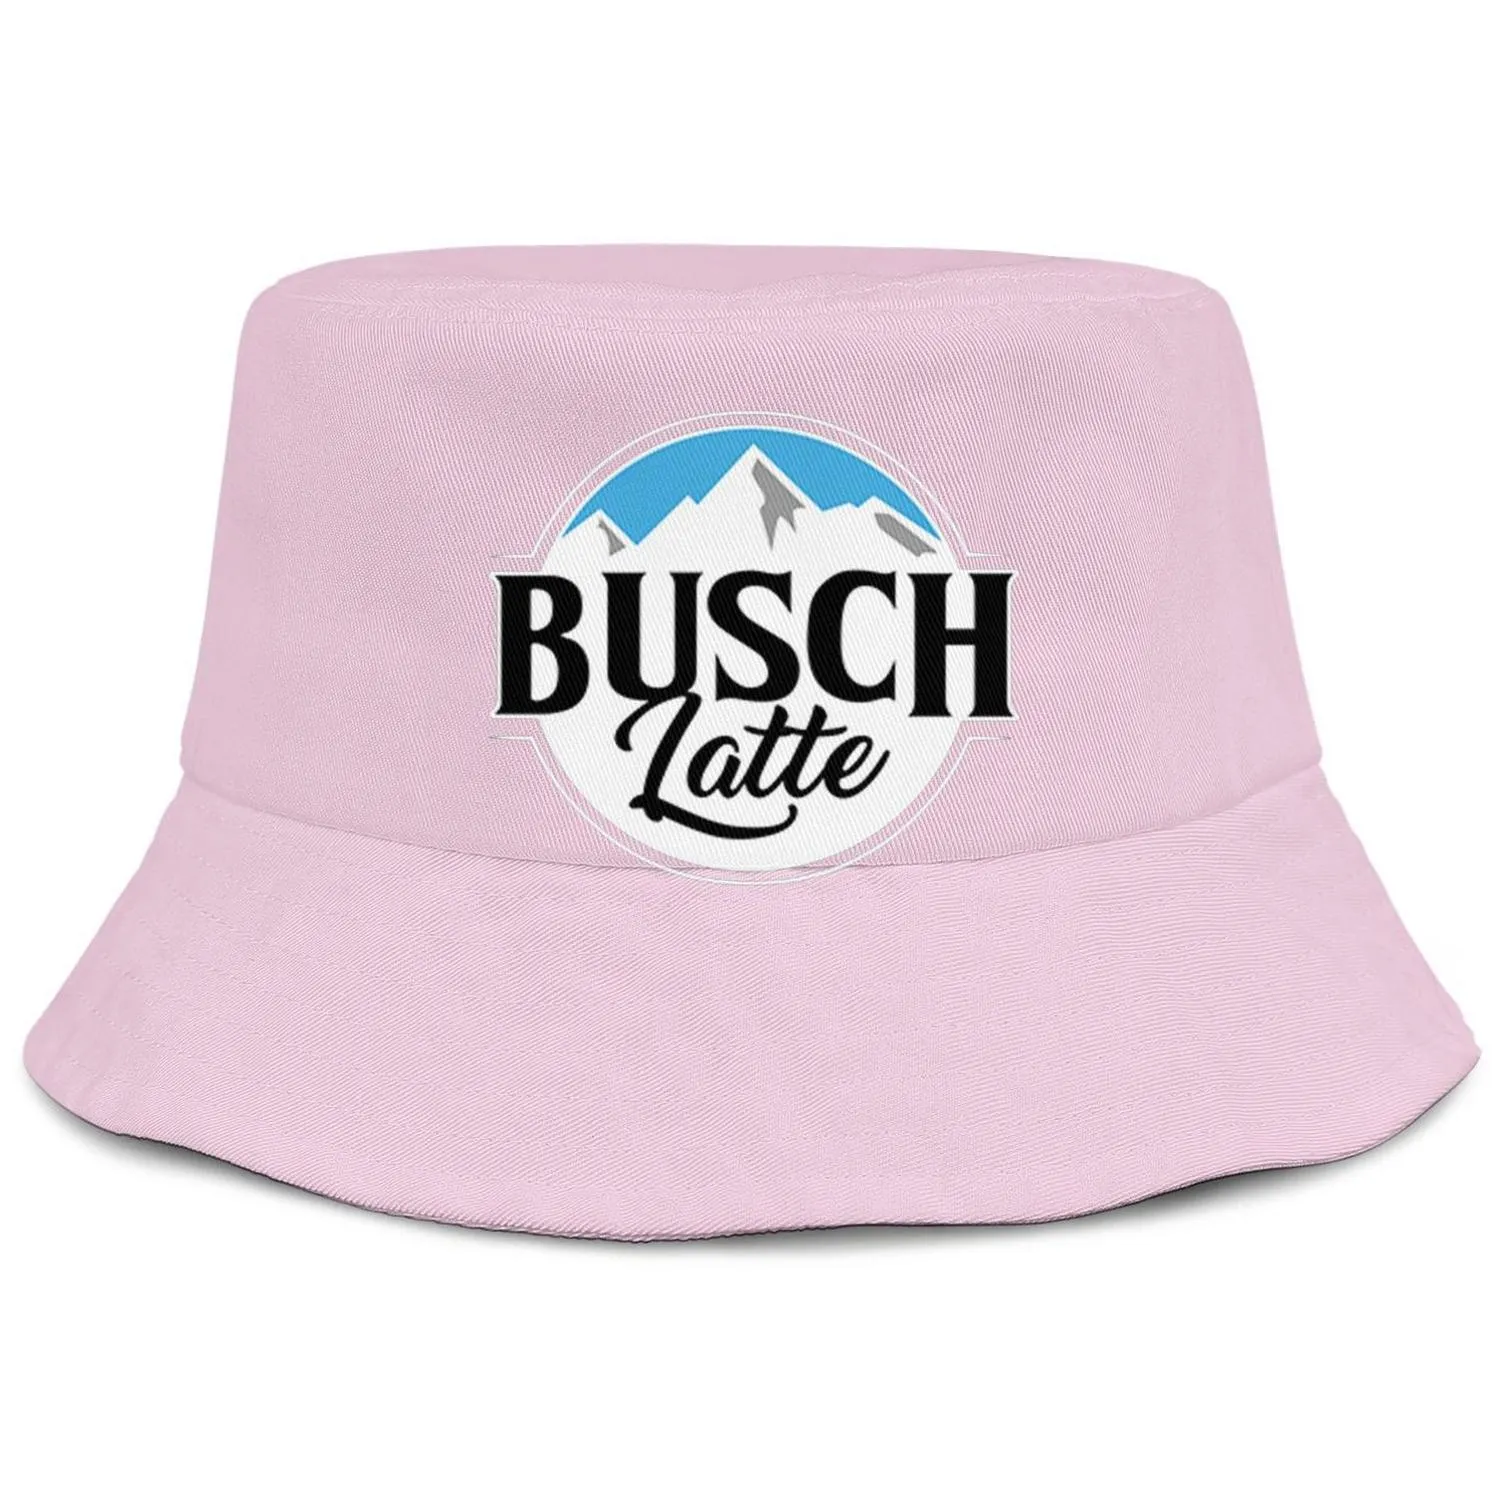 Busch Light Beer Logo Mens and Womens Buckethat Cool Youth Hink Baseballcap Light Blue Adge White Latte Så mycket1841754